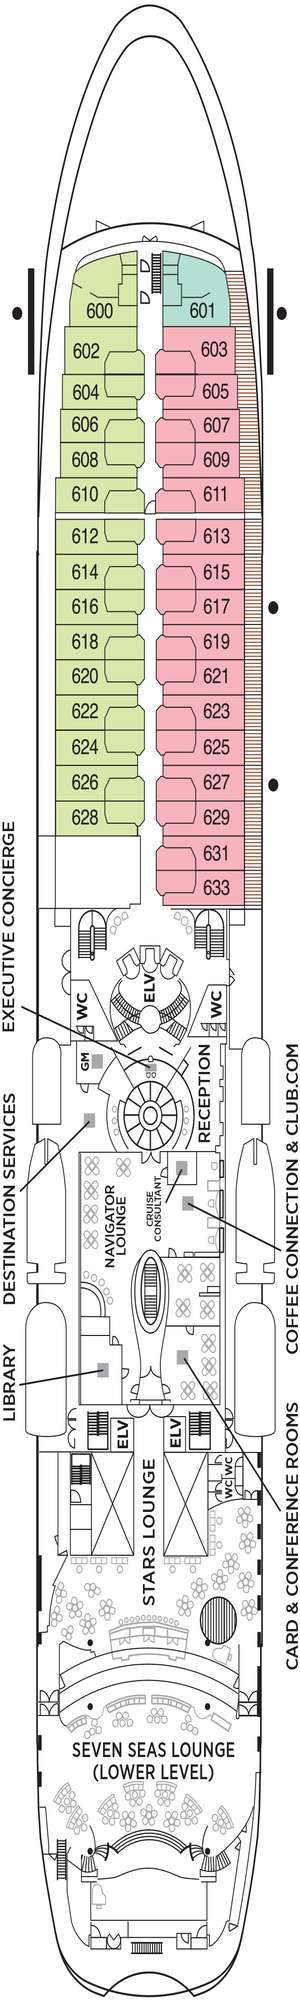 Deck plan for Regent Seven Seas Navigator